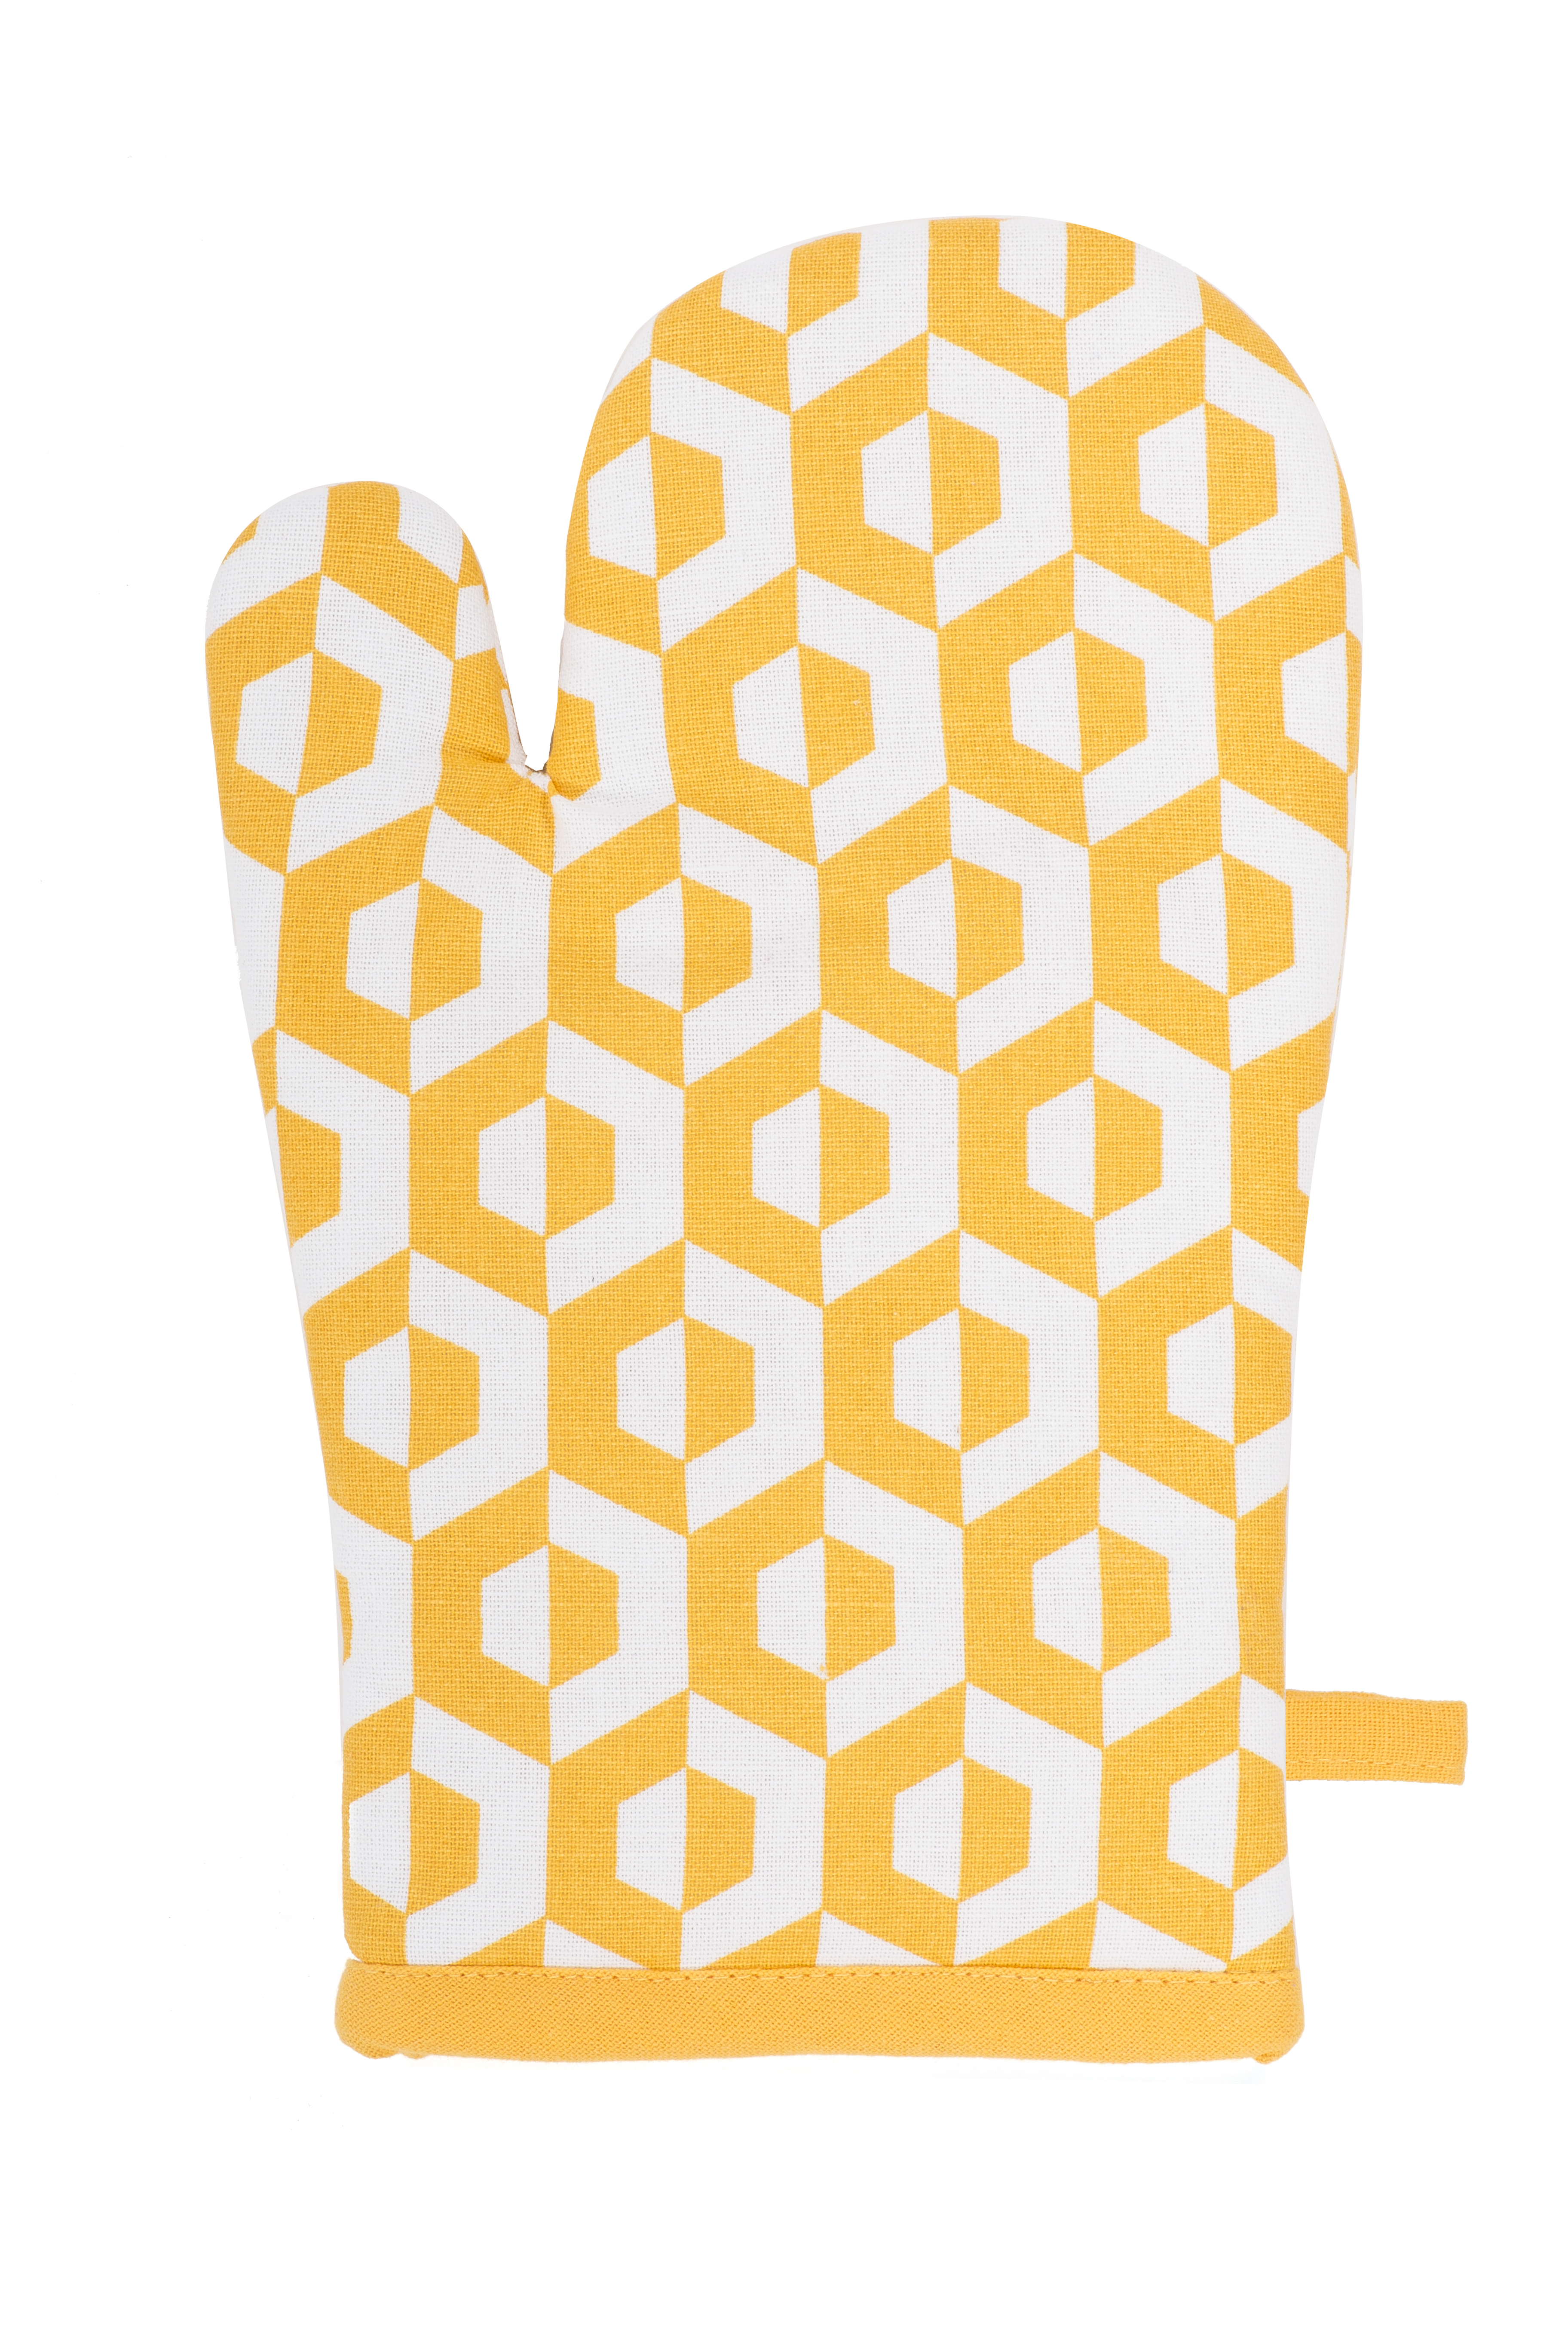 Glove geo hexagon 18x28, +J-hook, yellow